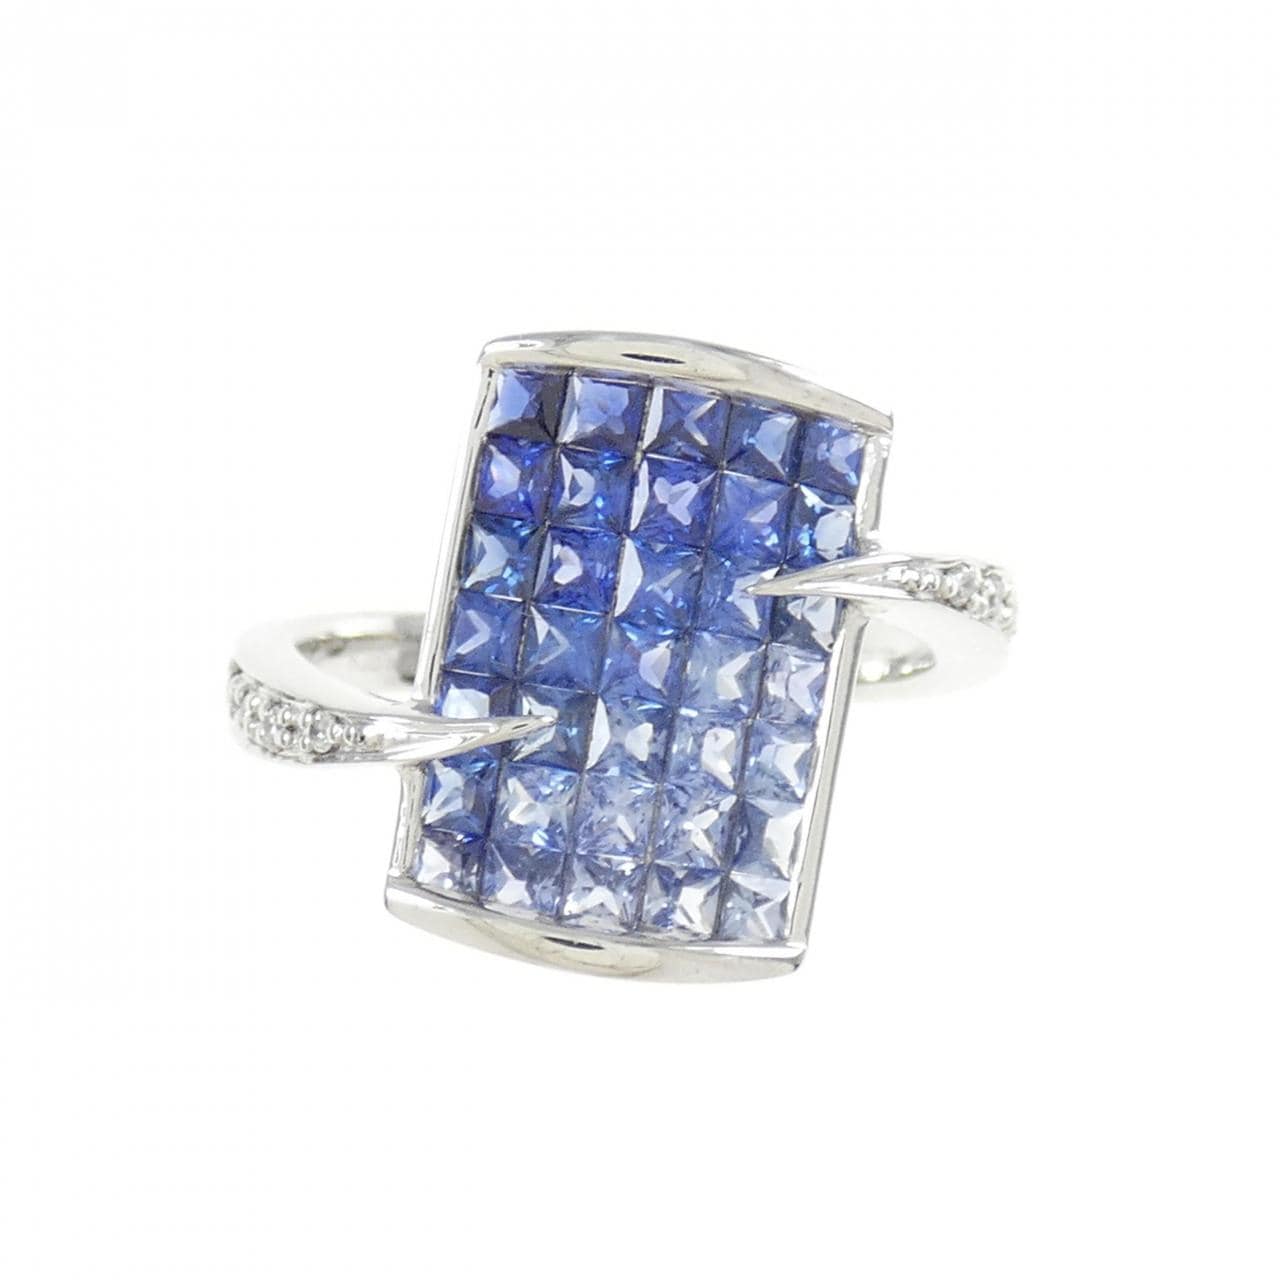 K18WG Sapphire Ring 1.75CT